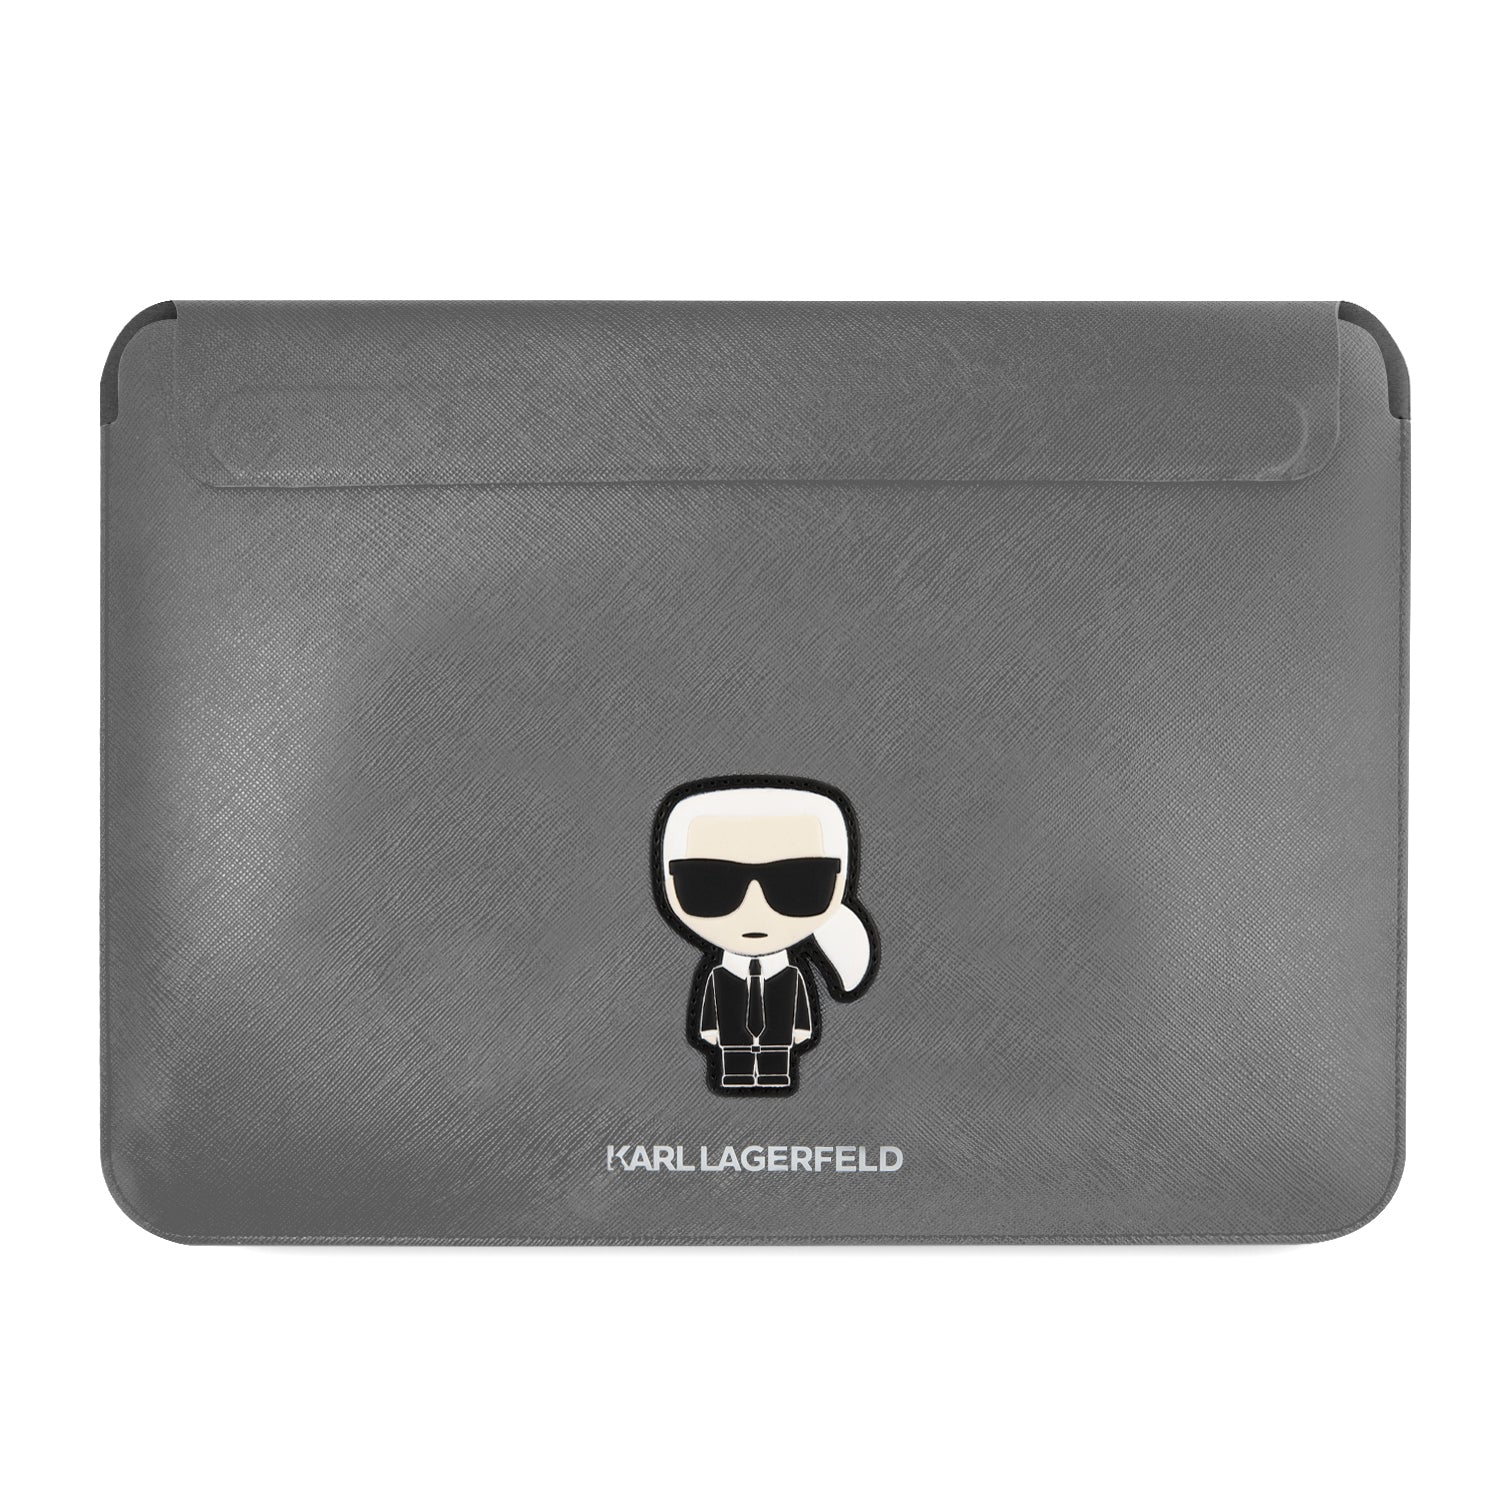 Karl Lagerfeld iconic laptop sleeve